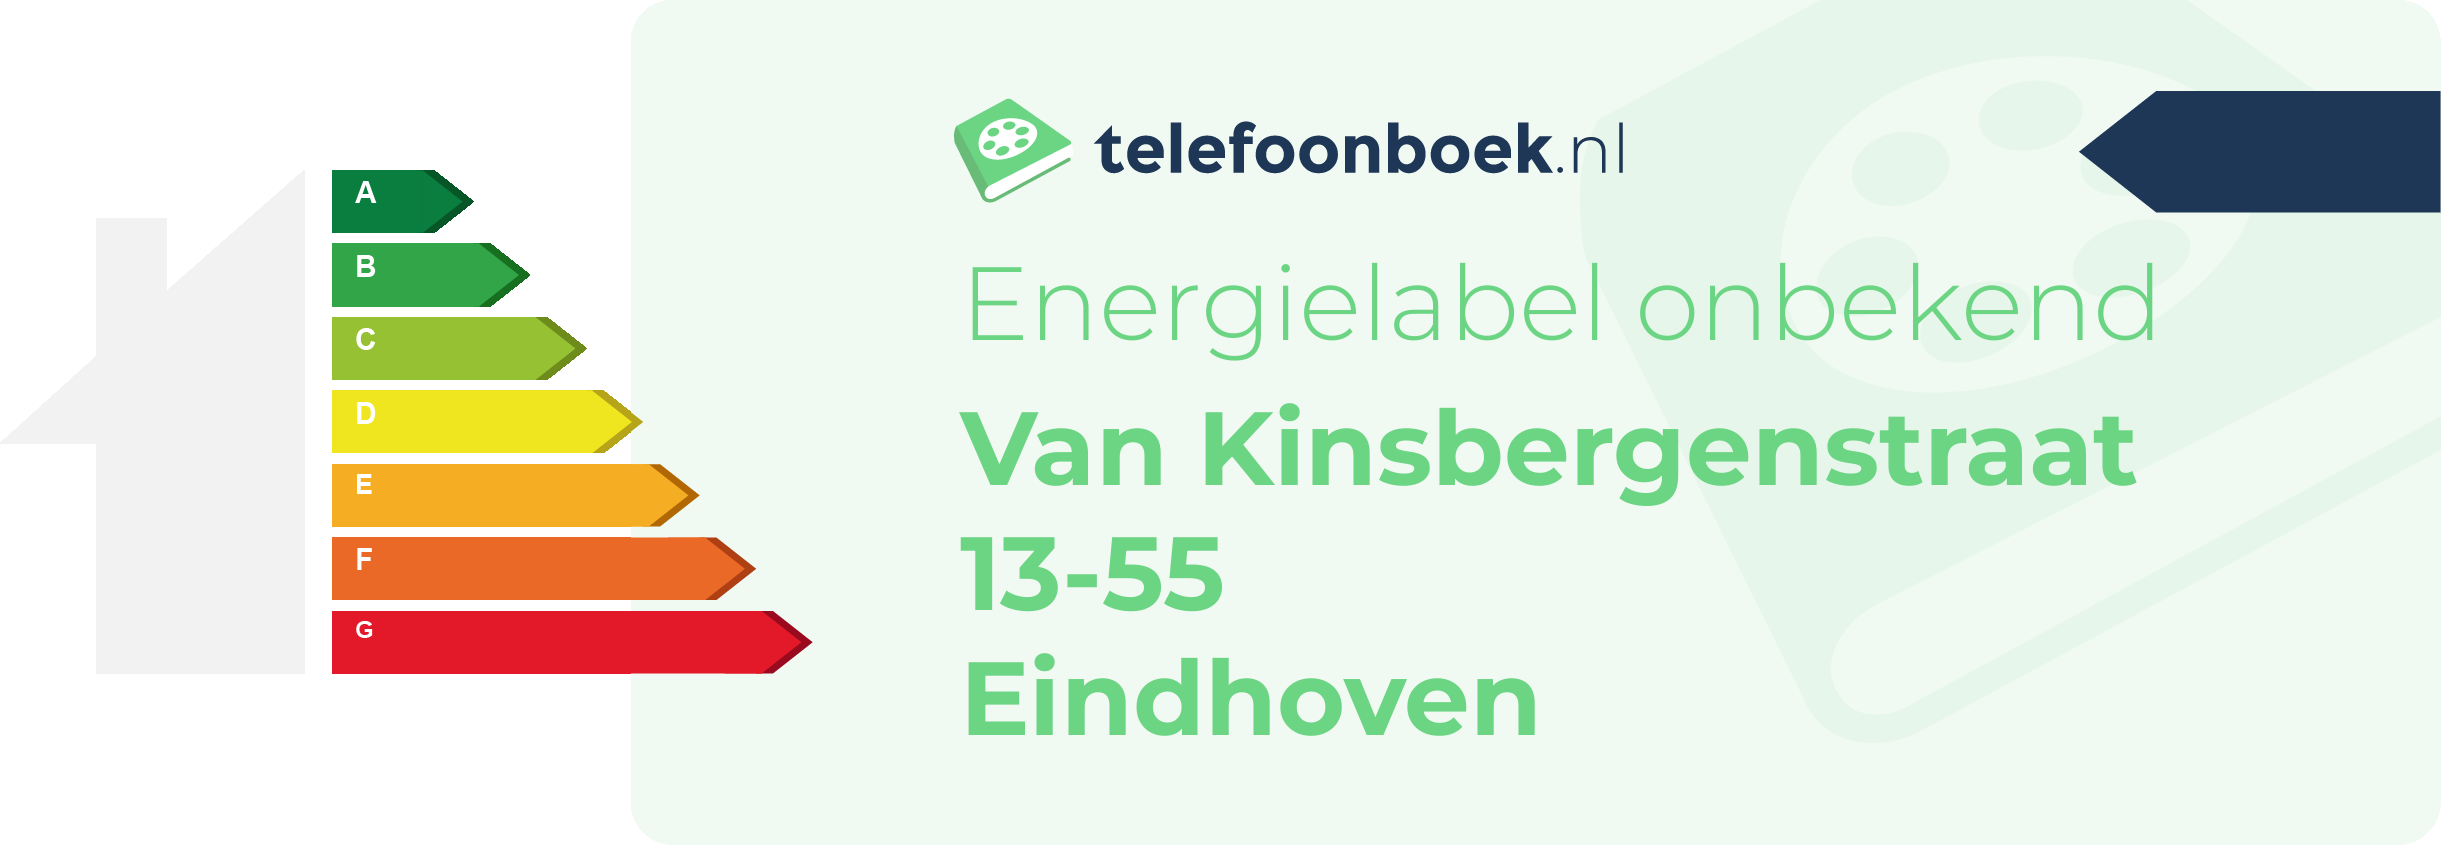 Energielabel Van Kinsbergenstraat 13-55 Eindhoven